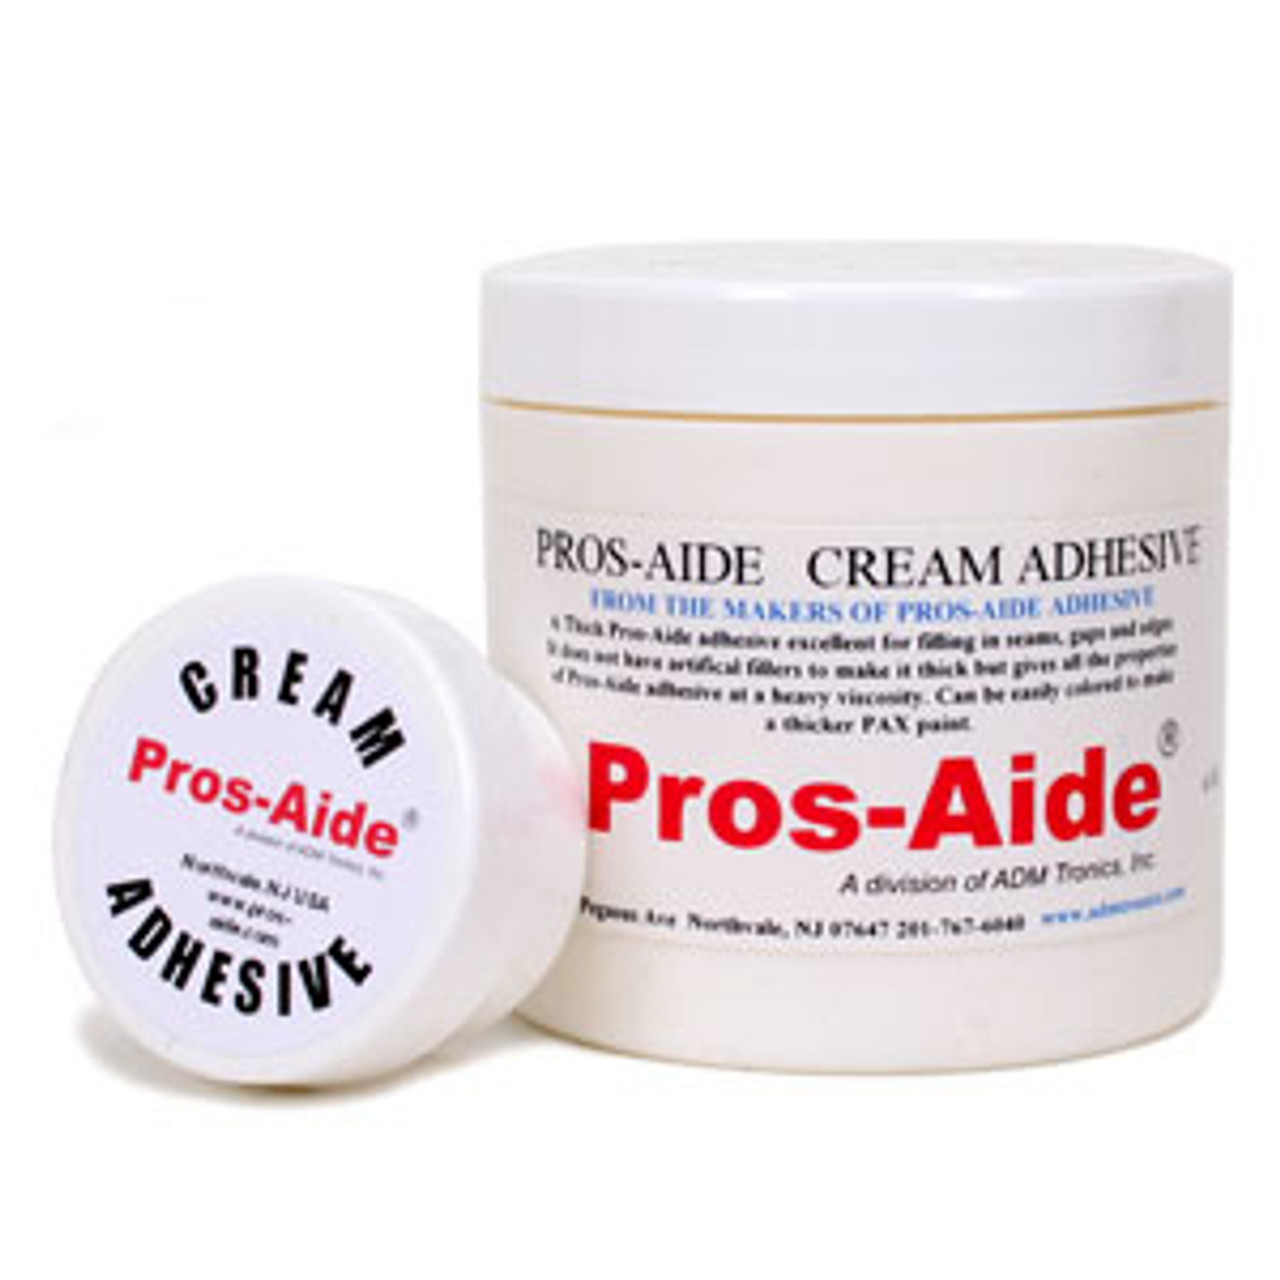 Pros-Aide Cream Adhesive - Norcostco, Inc.